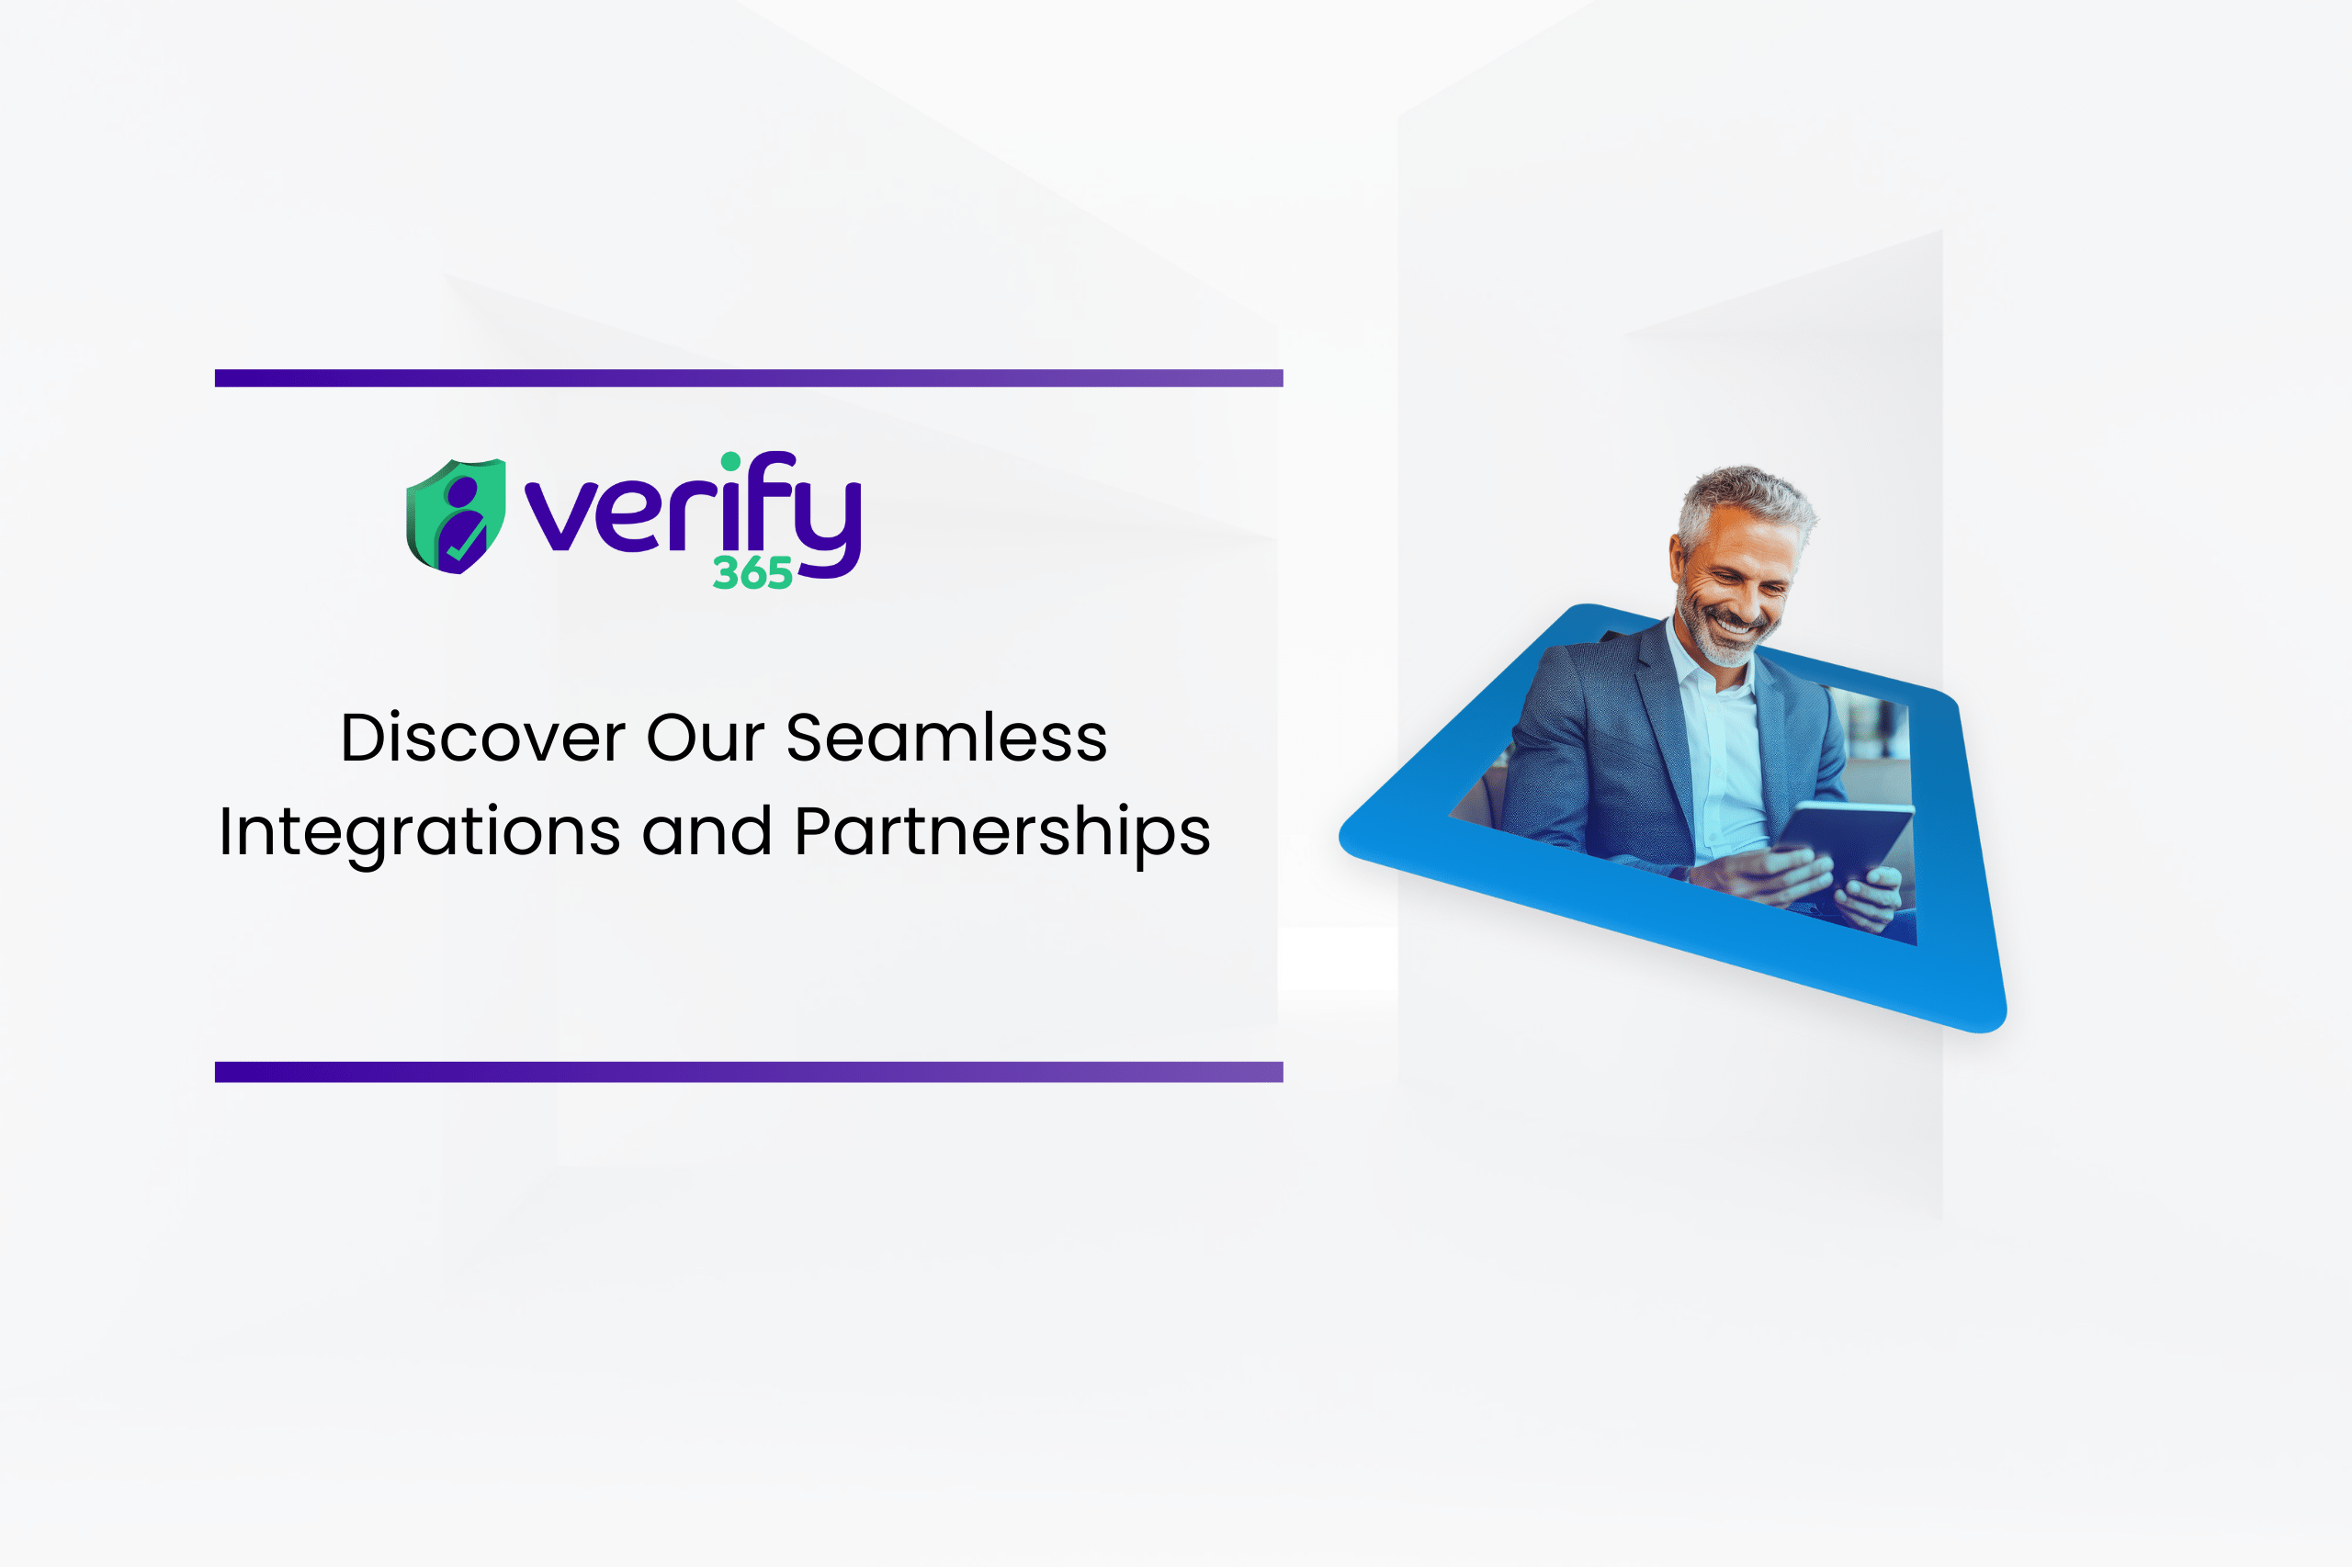 Verify 365's Seamless Integrations